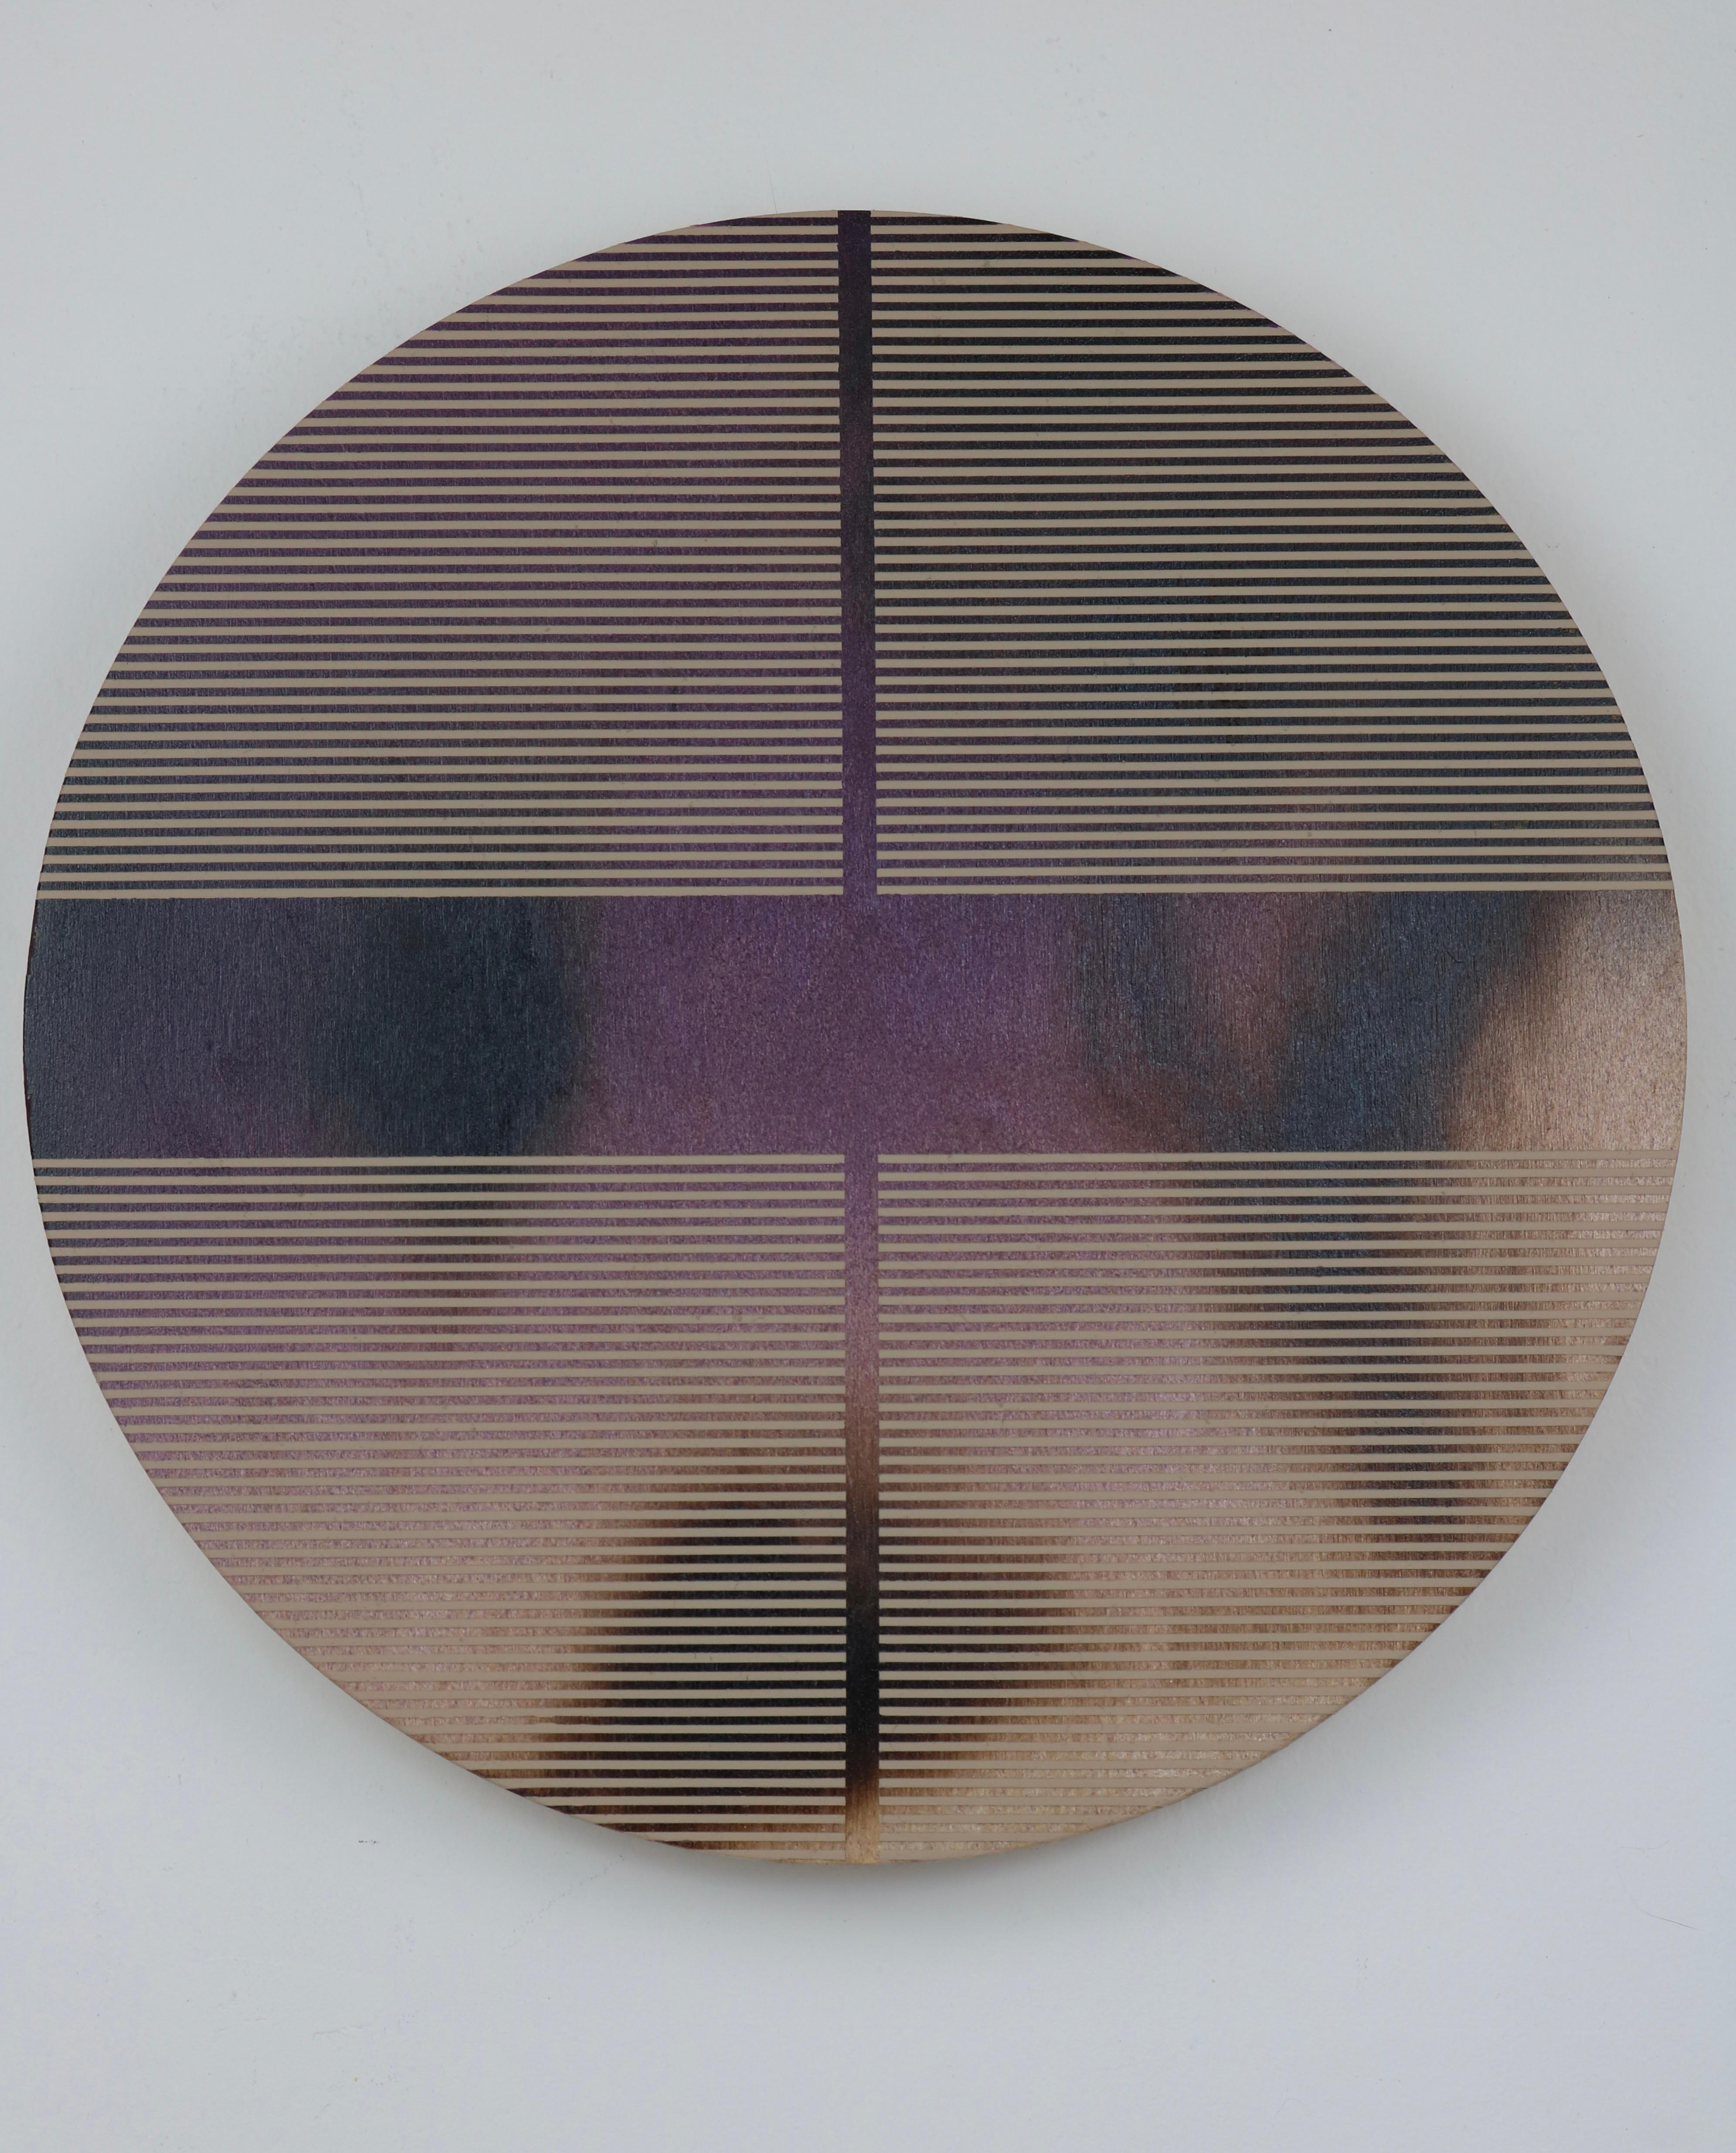 Aubergine Purple pill (minimaliste grid round painting on wood dopamine) - Mixed Media Art by Melisa Taylor Metzger